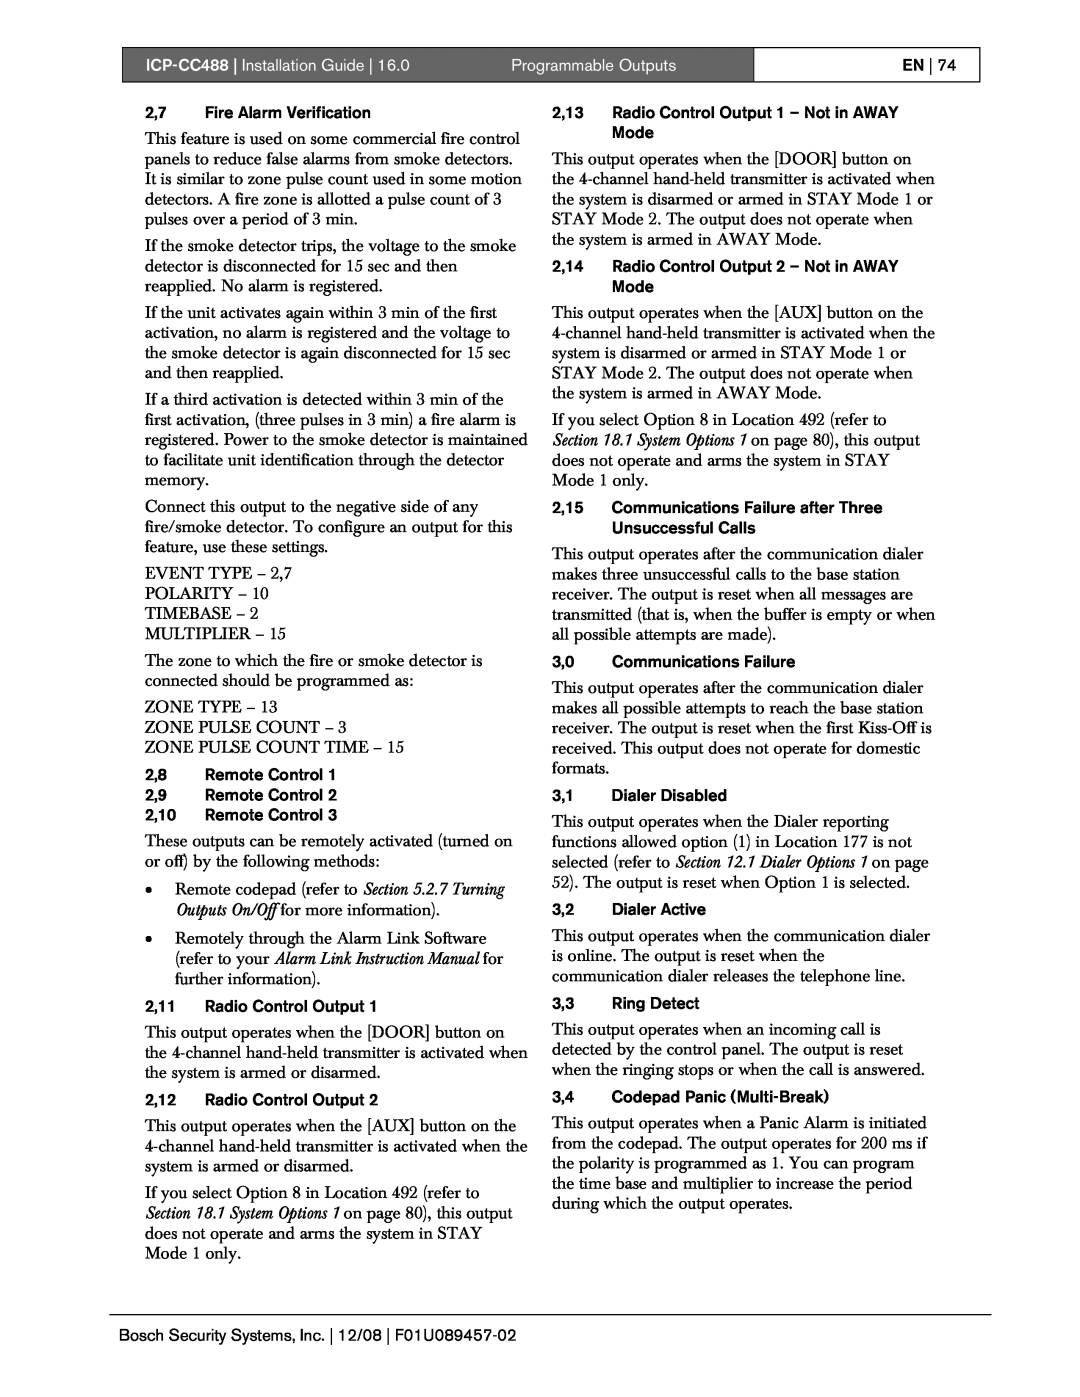 Bosch Appliances manual ICP-CC488 Installation Guide, Programmable Outputs, En 